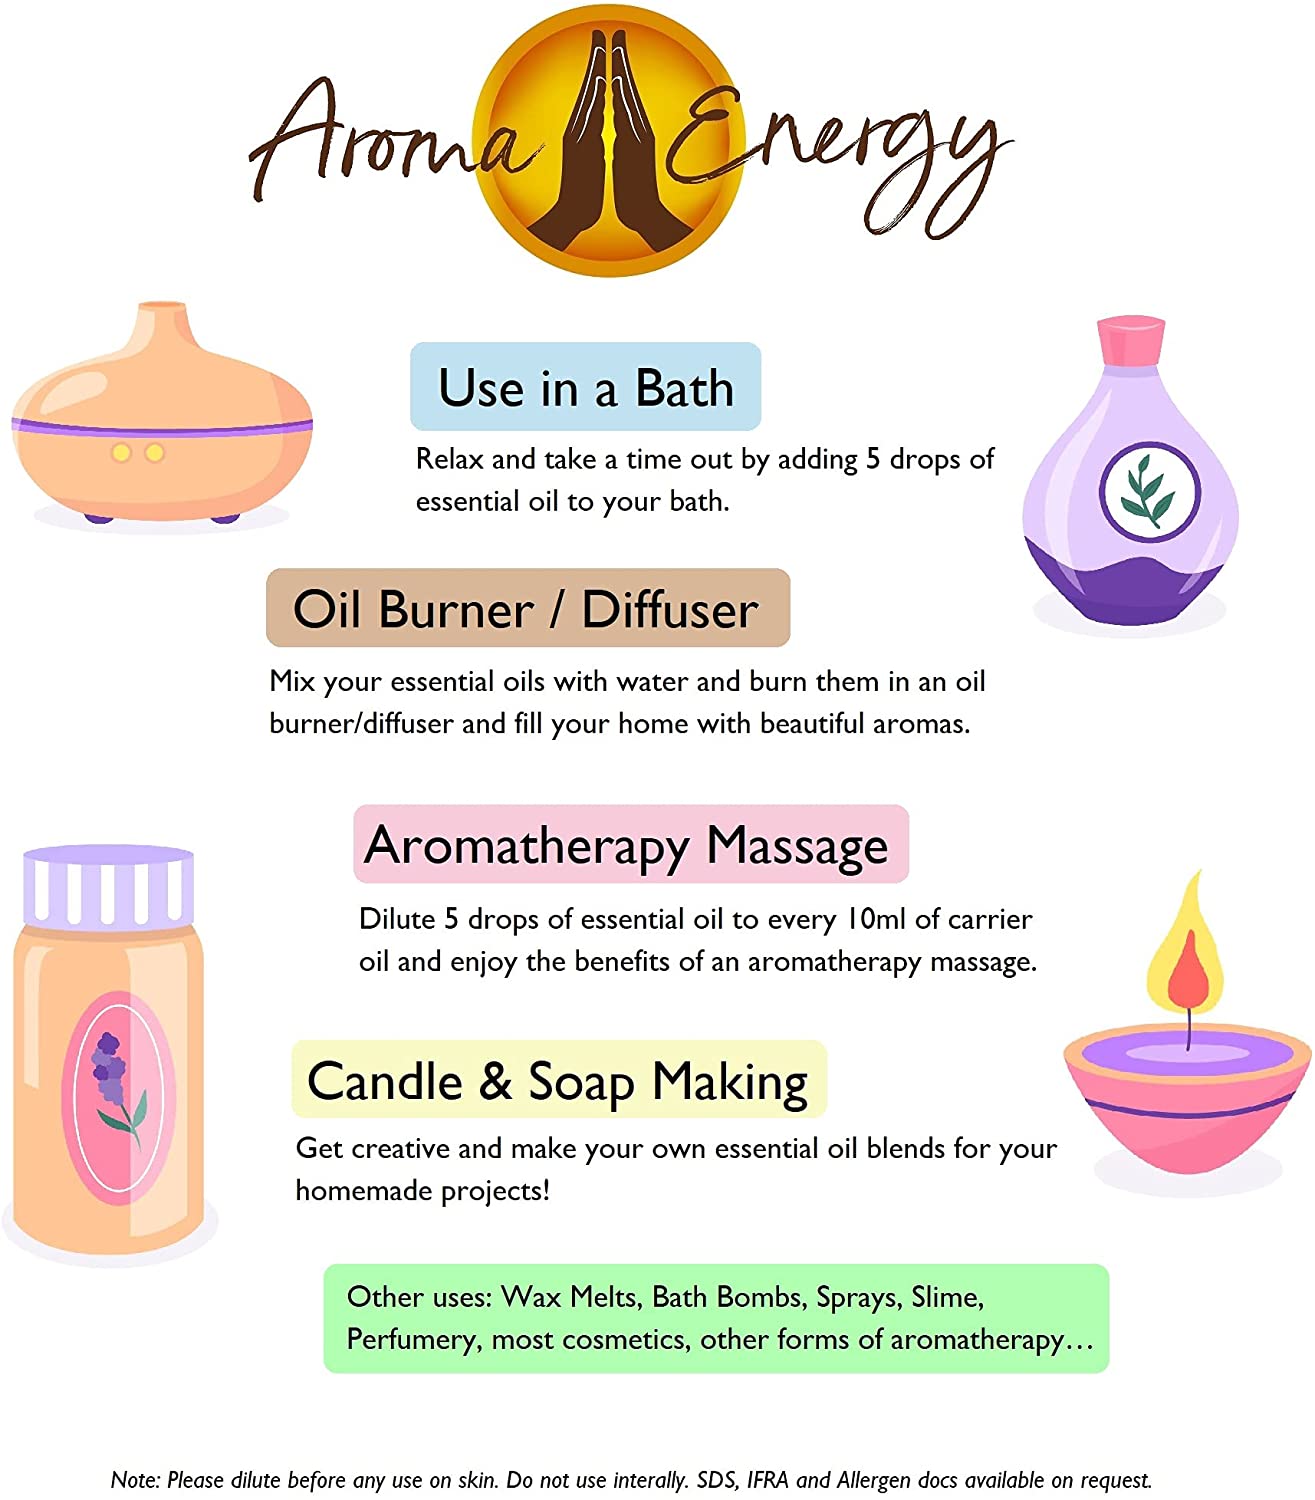 Memory Life Essential Oil - Aroma Energy